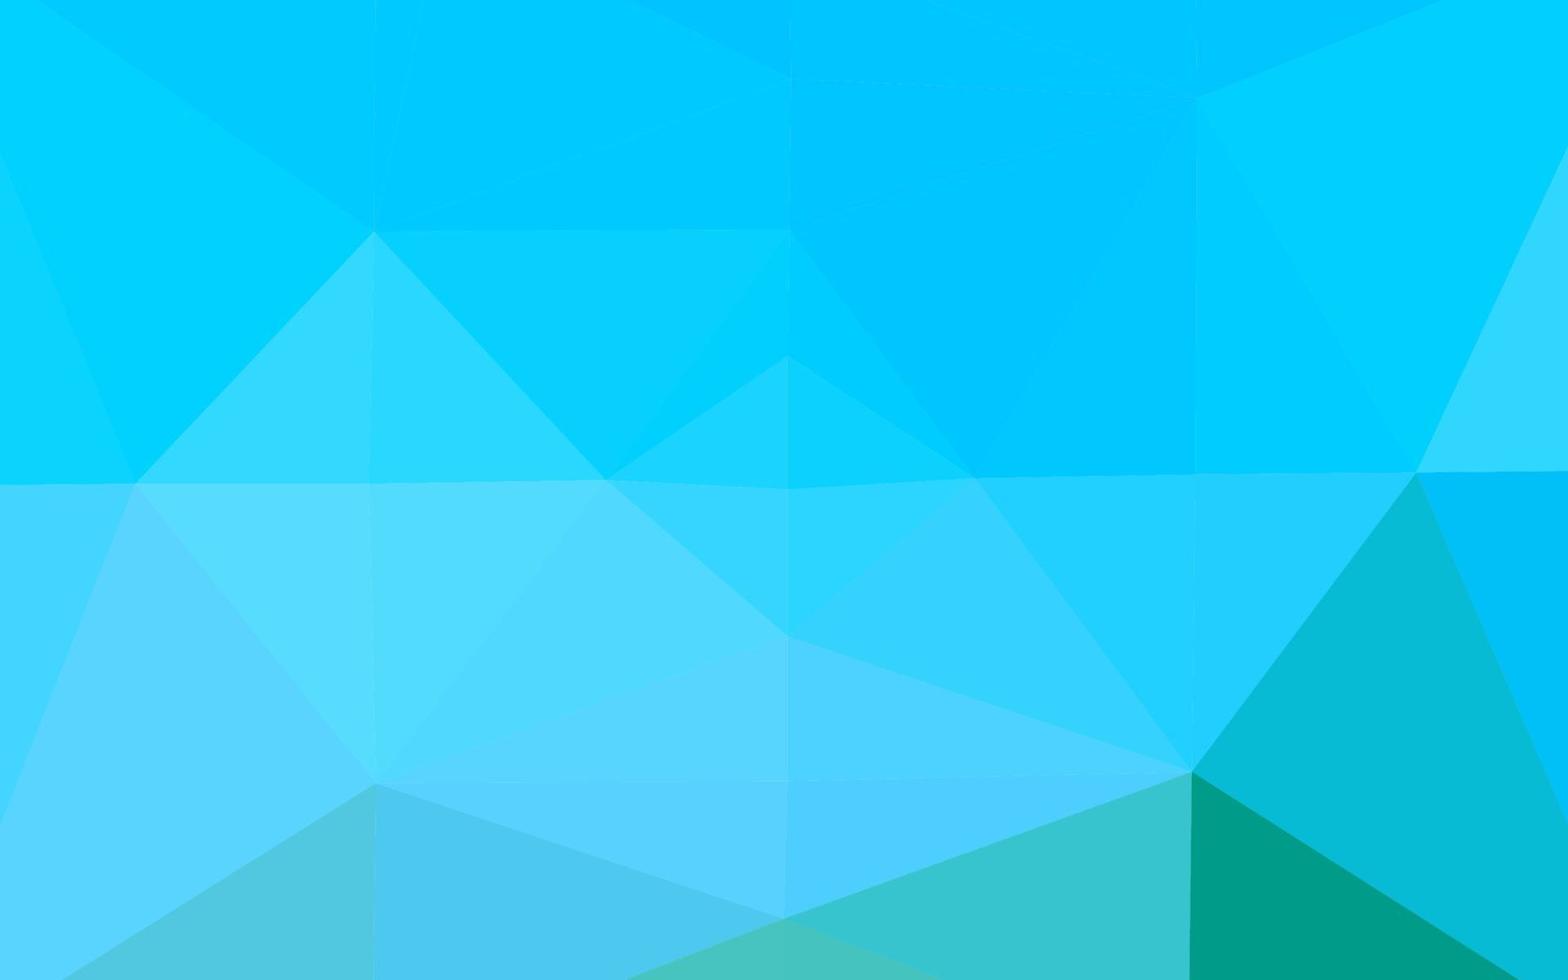 modelo de triângulo embaçado de vetor azul claro e verde.